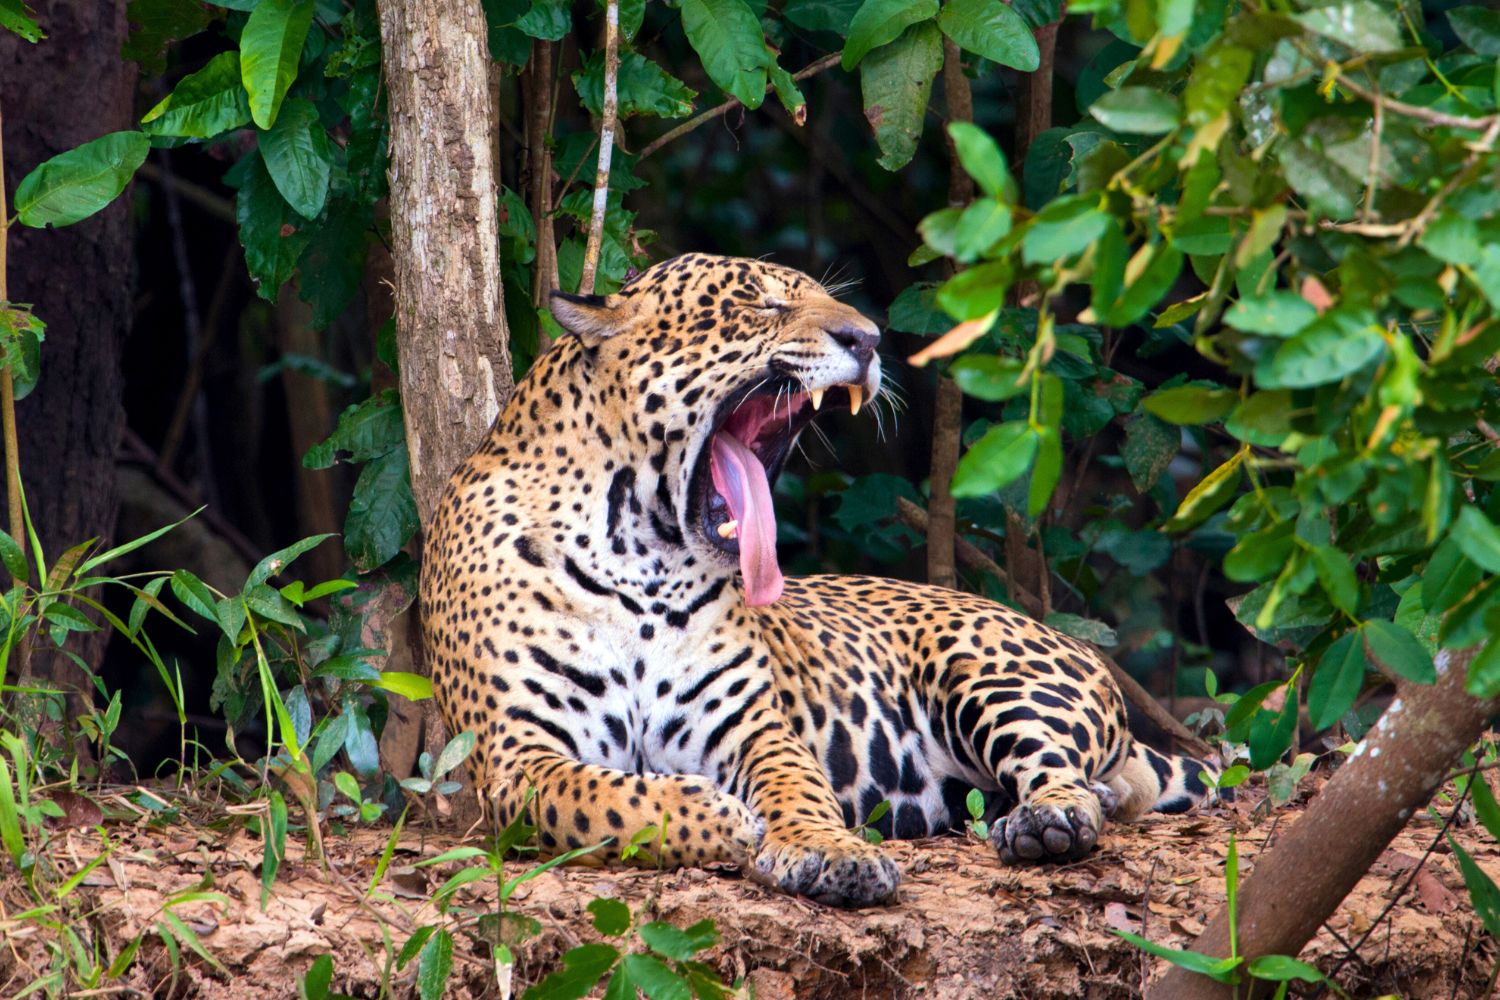 8. The jaguar bite.